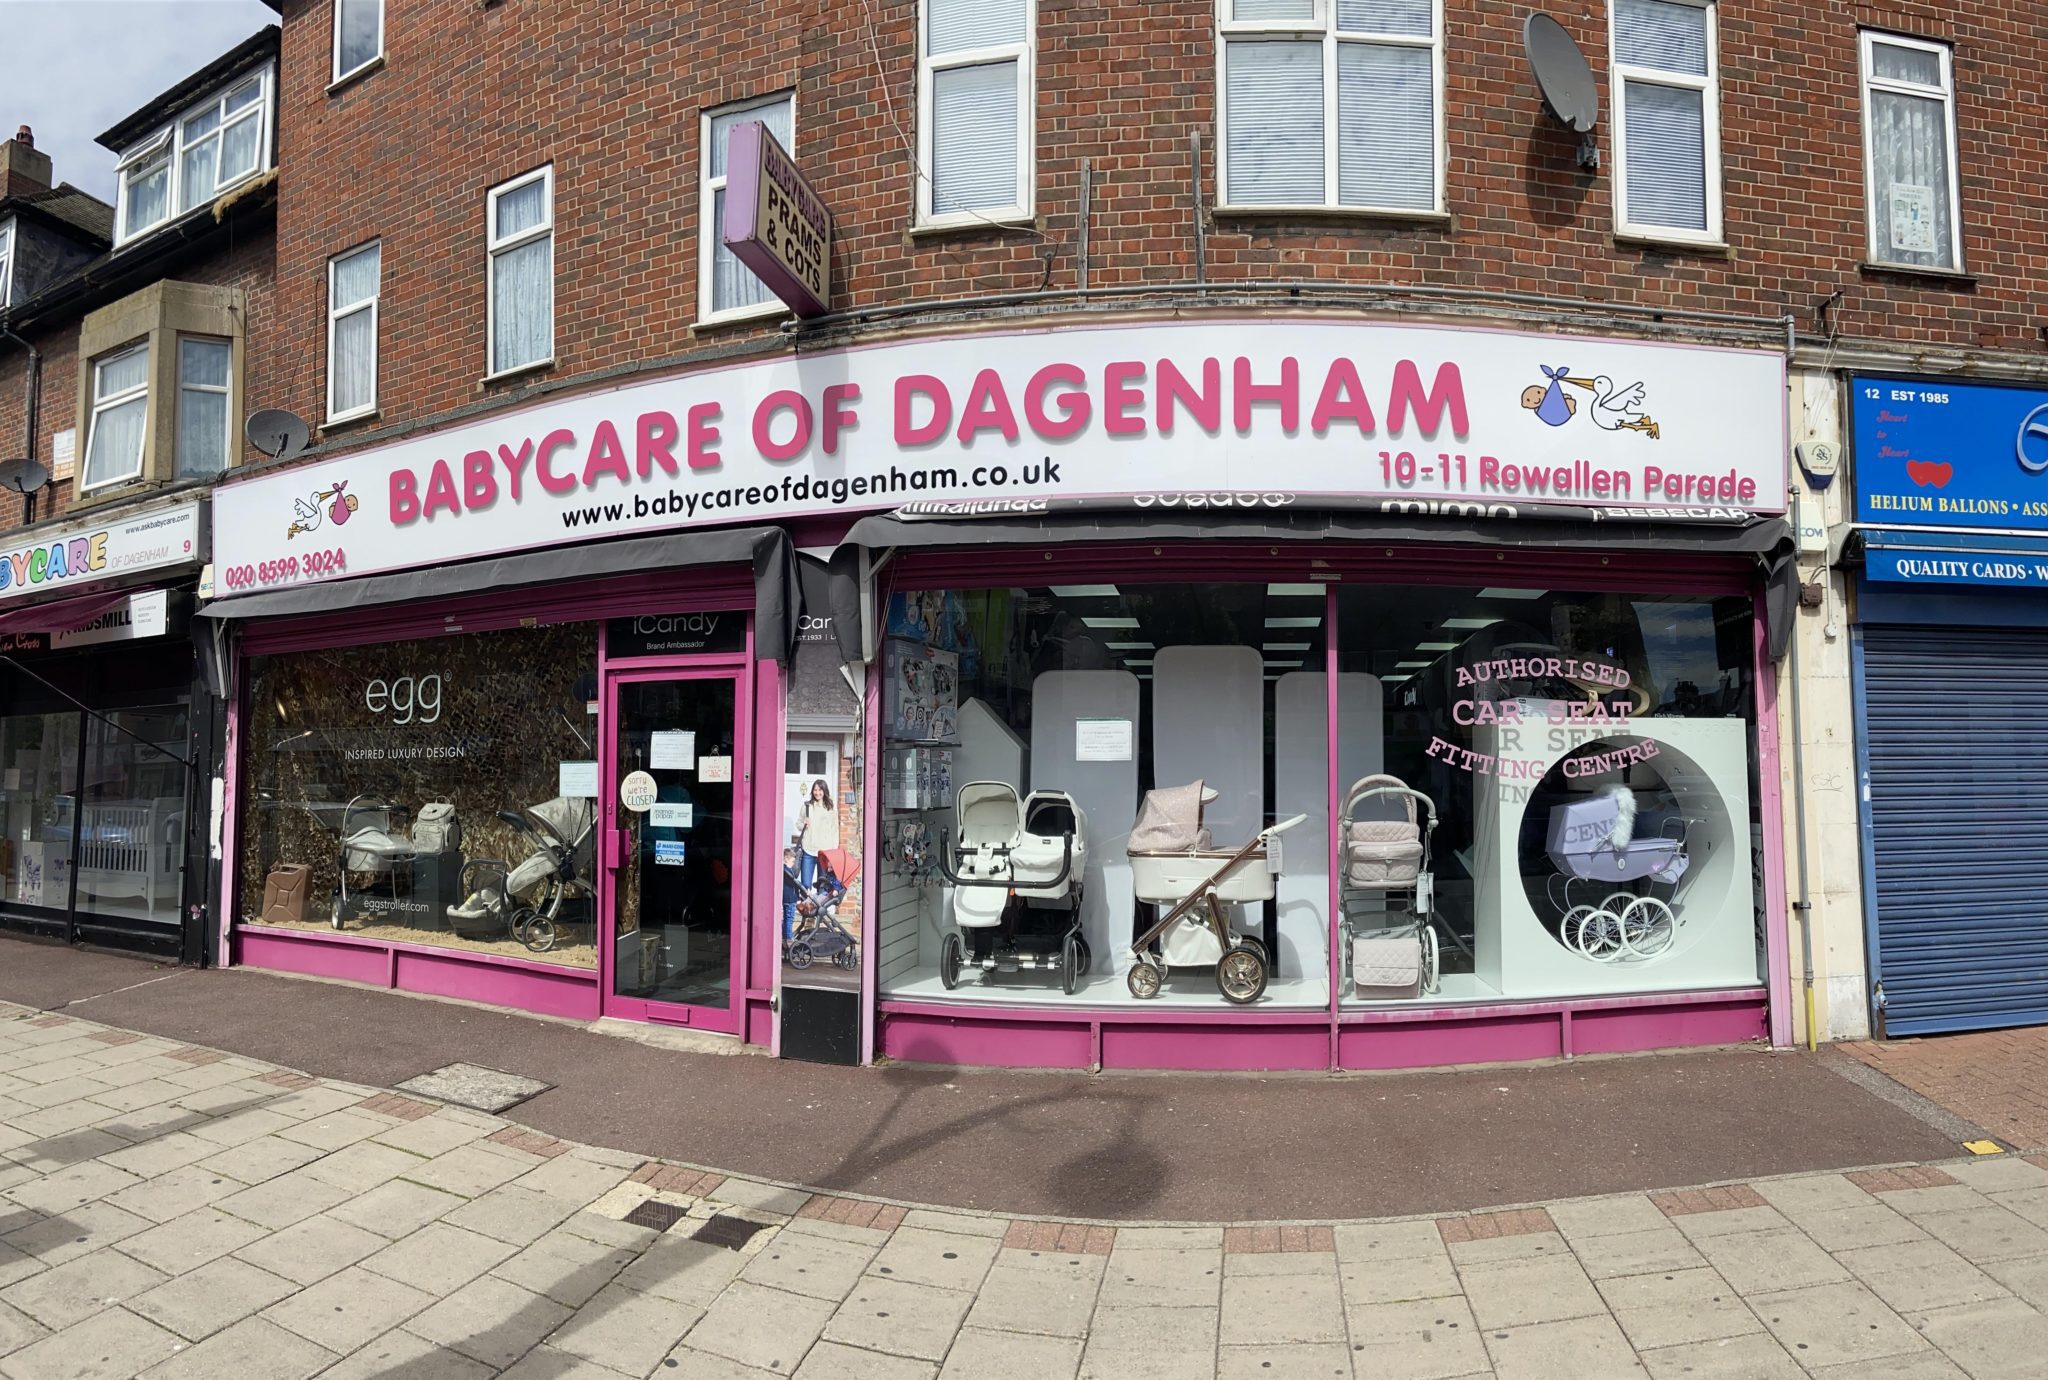 Babycare of Dagenham